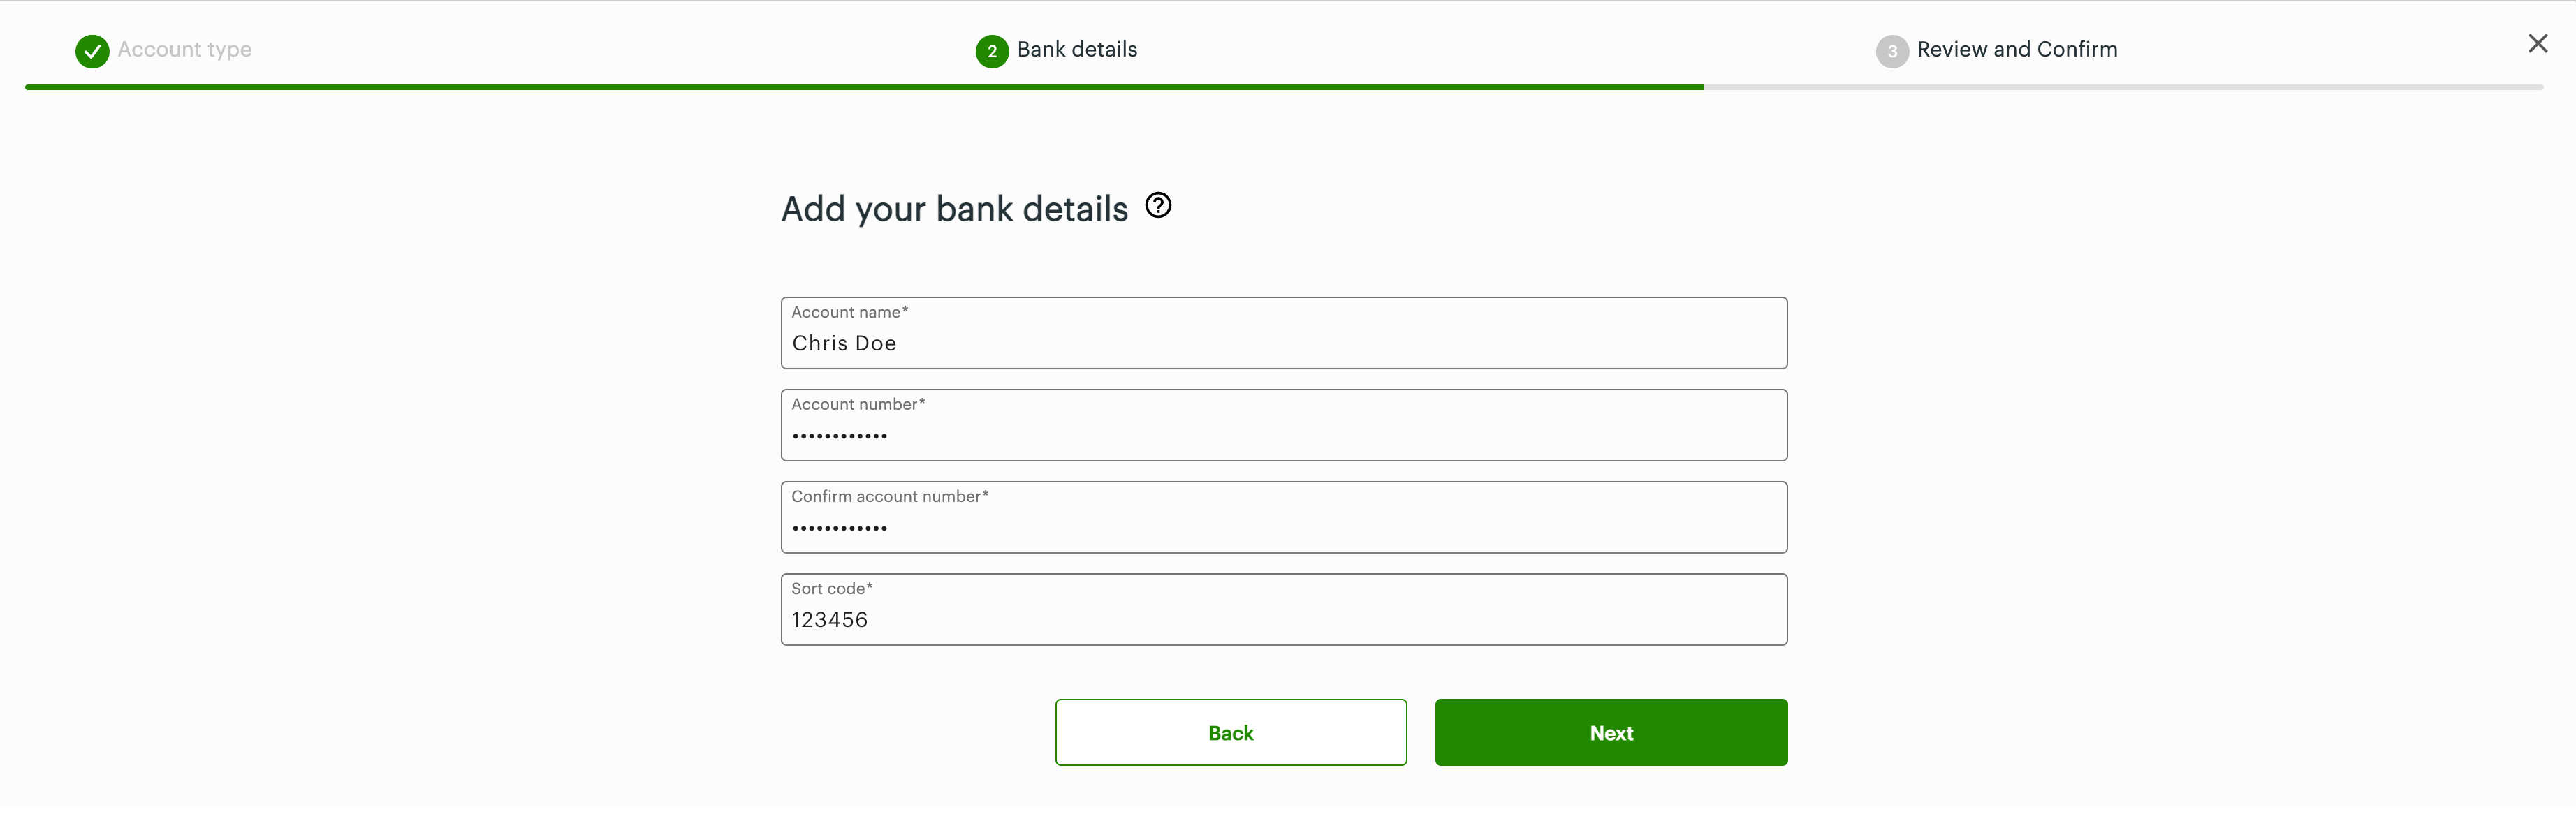 Add your bank details: Sort code - UK